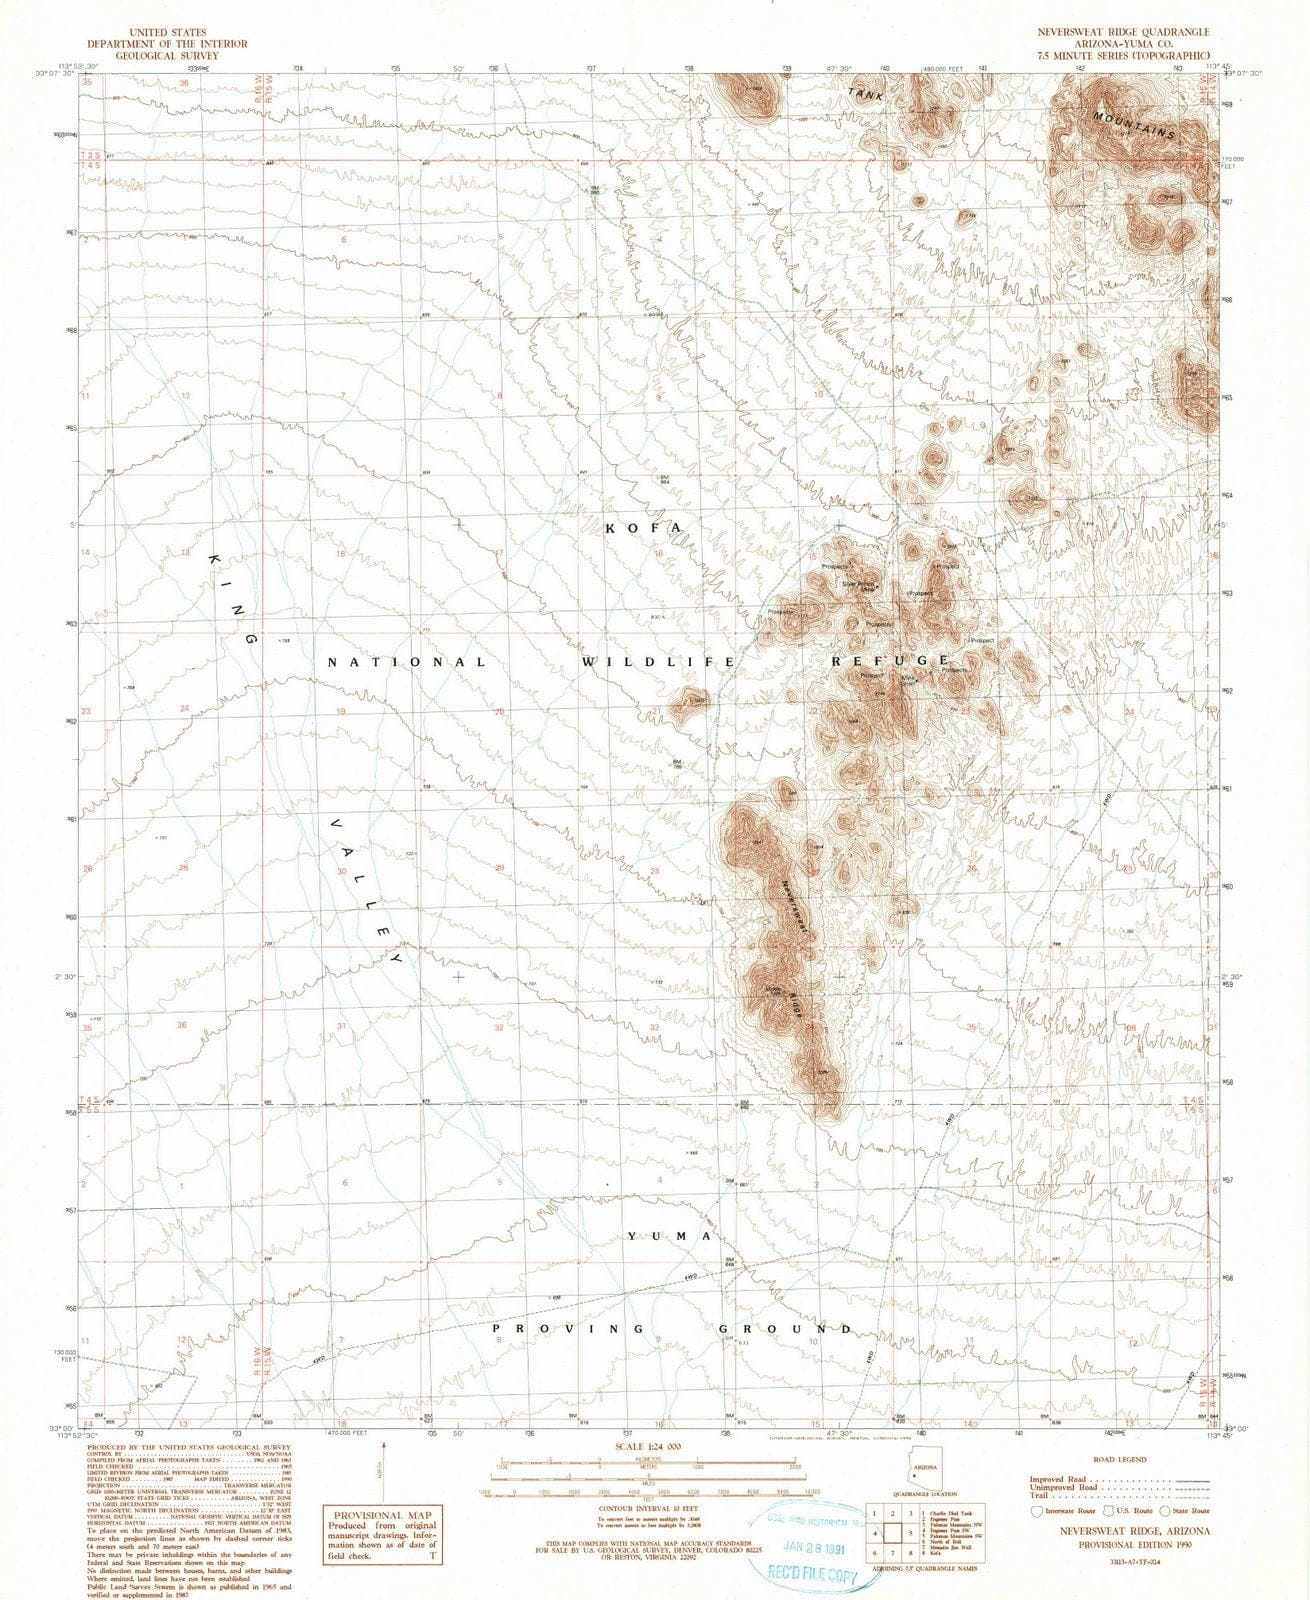 1990 Neversweat Ridge, AZ - Arizona - USGS Topographic Map